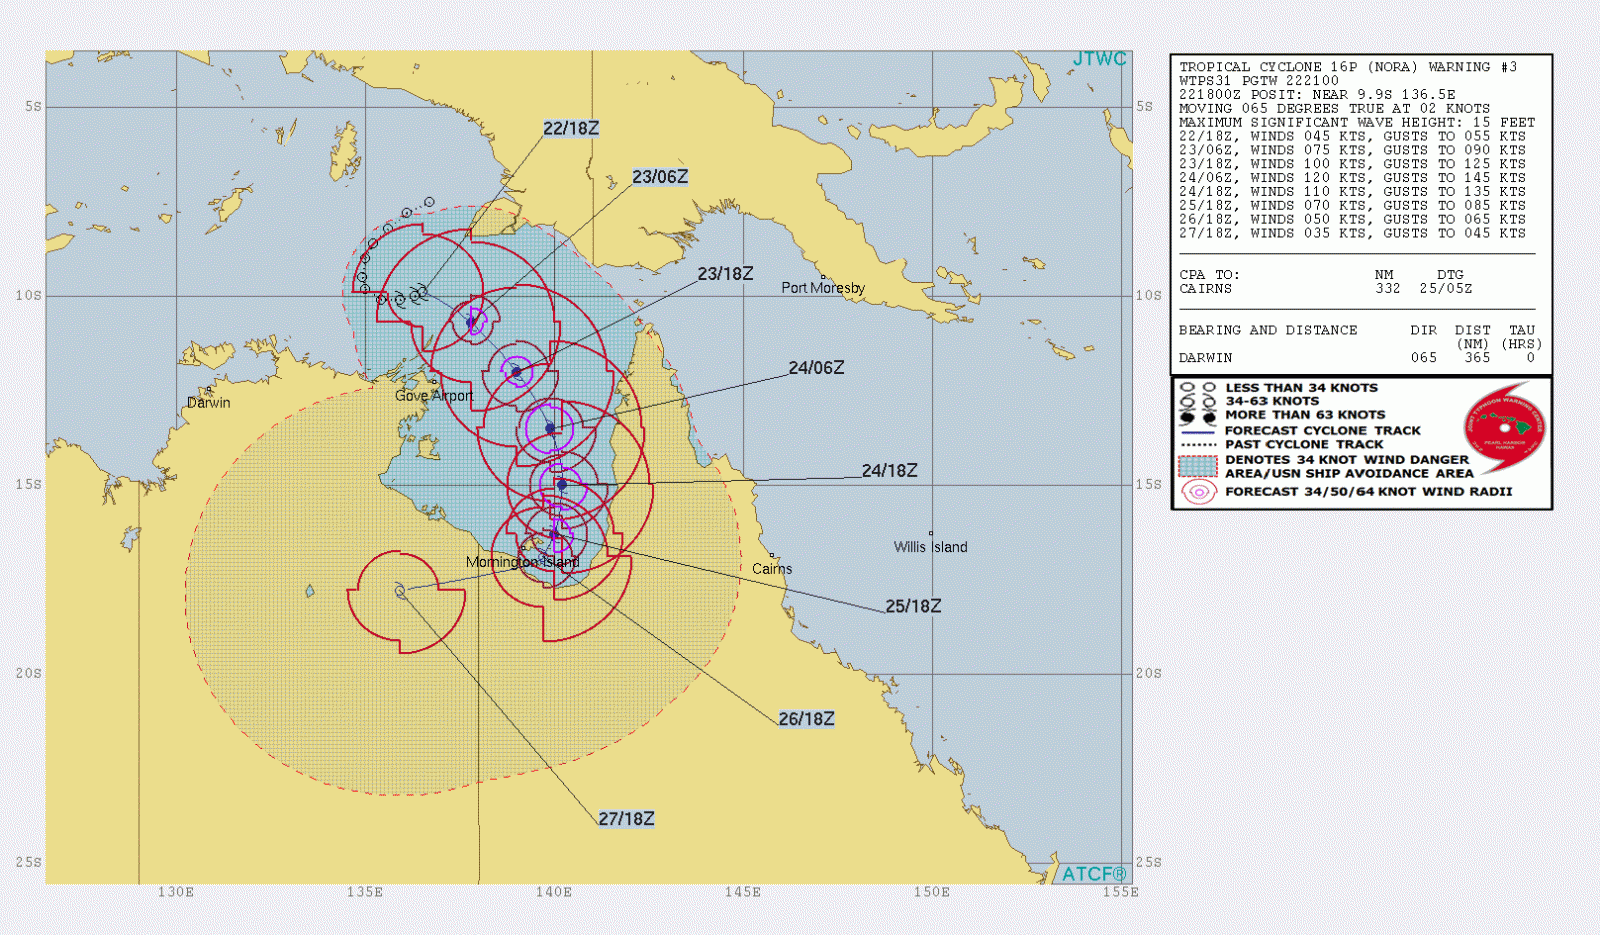 TC Nora JTWC forecast track